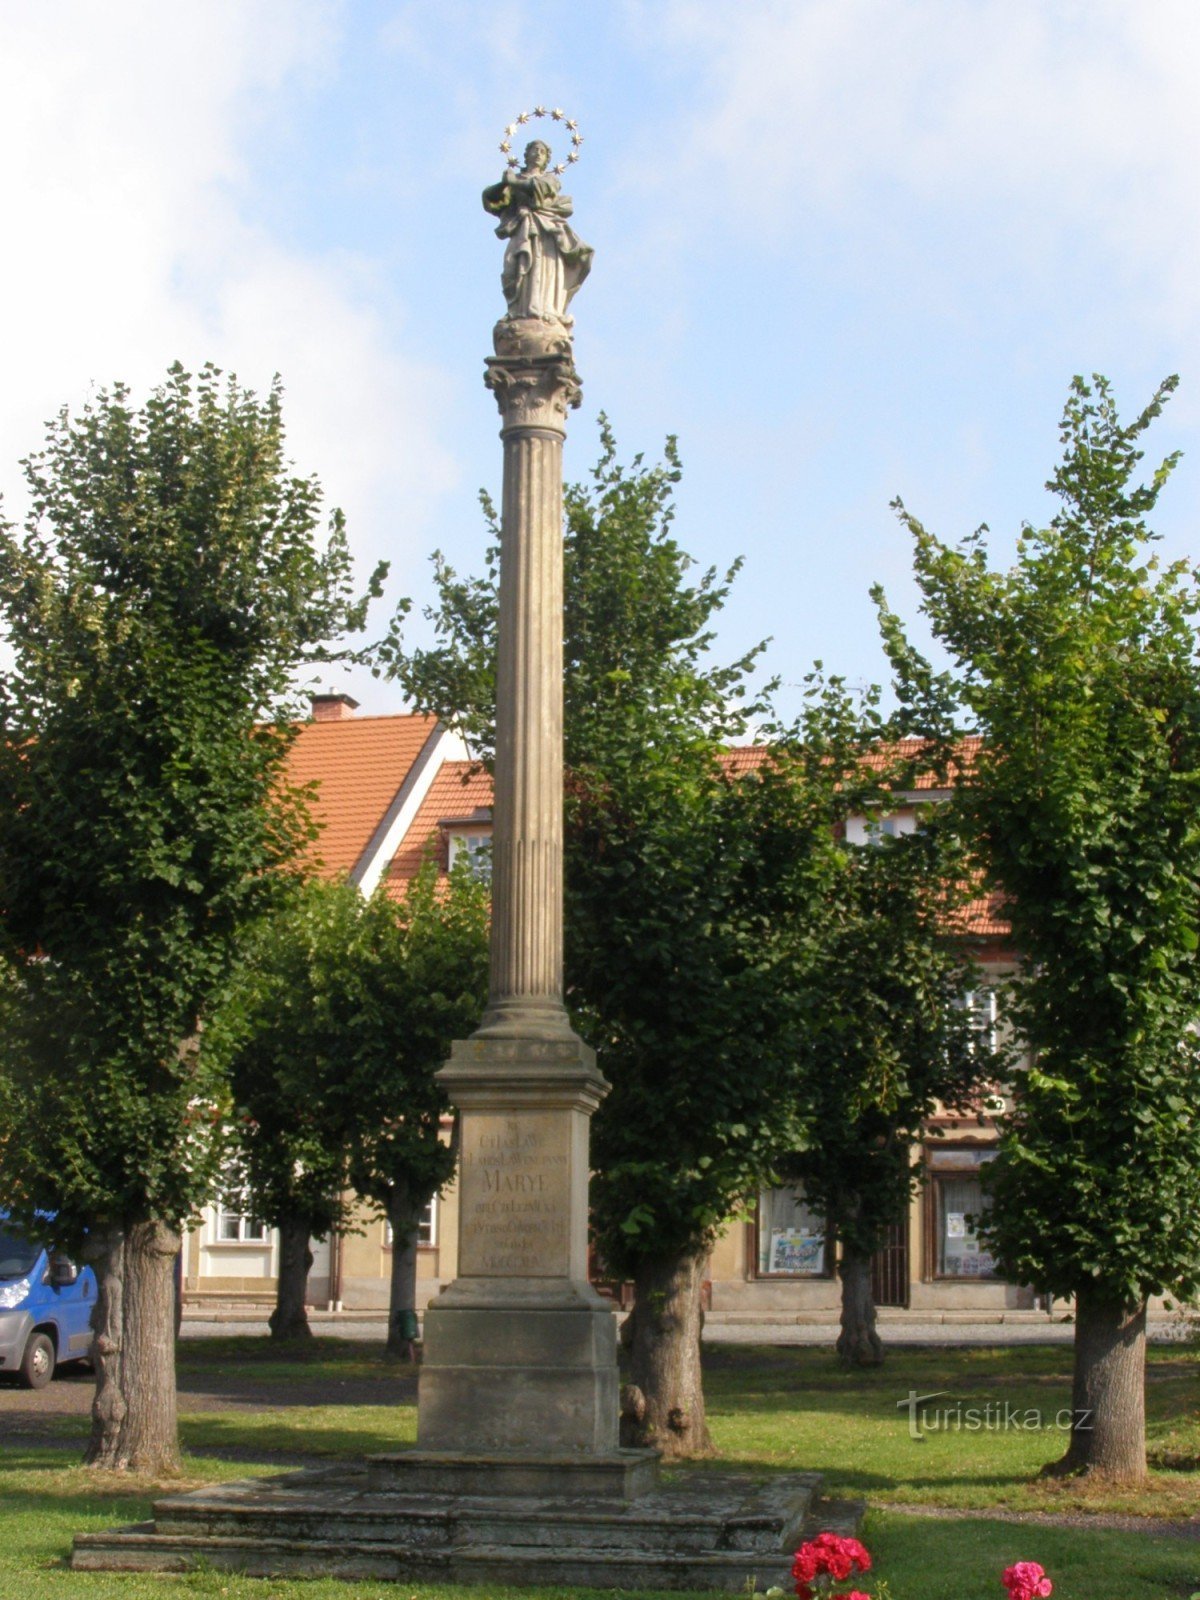 Järnväg - náměstí Svobody, uppsättning monument